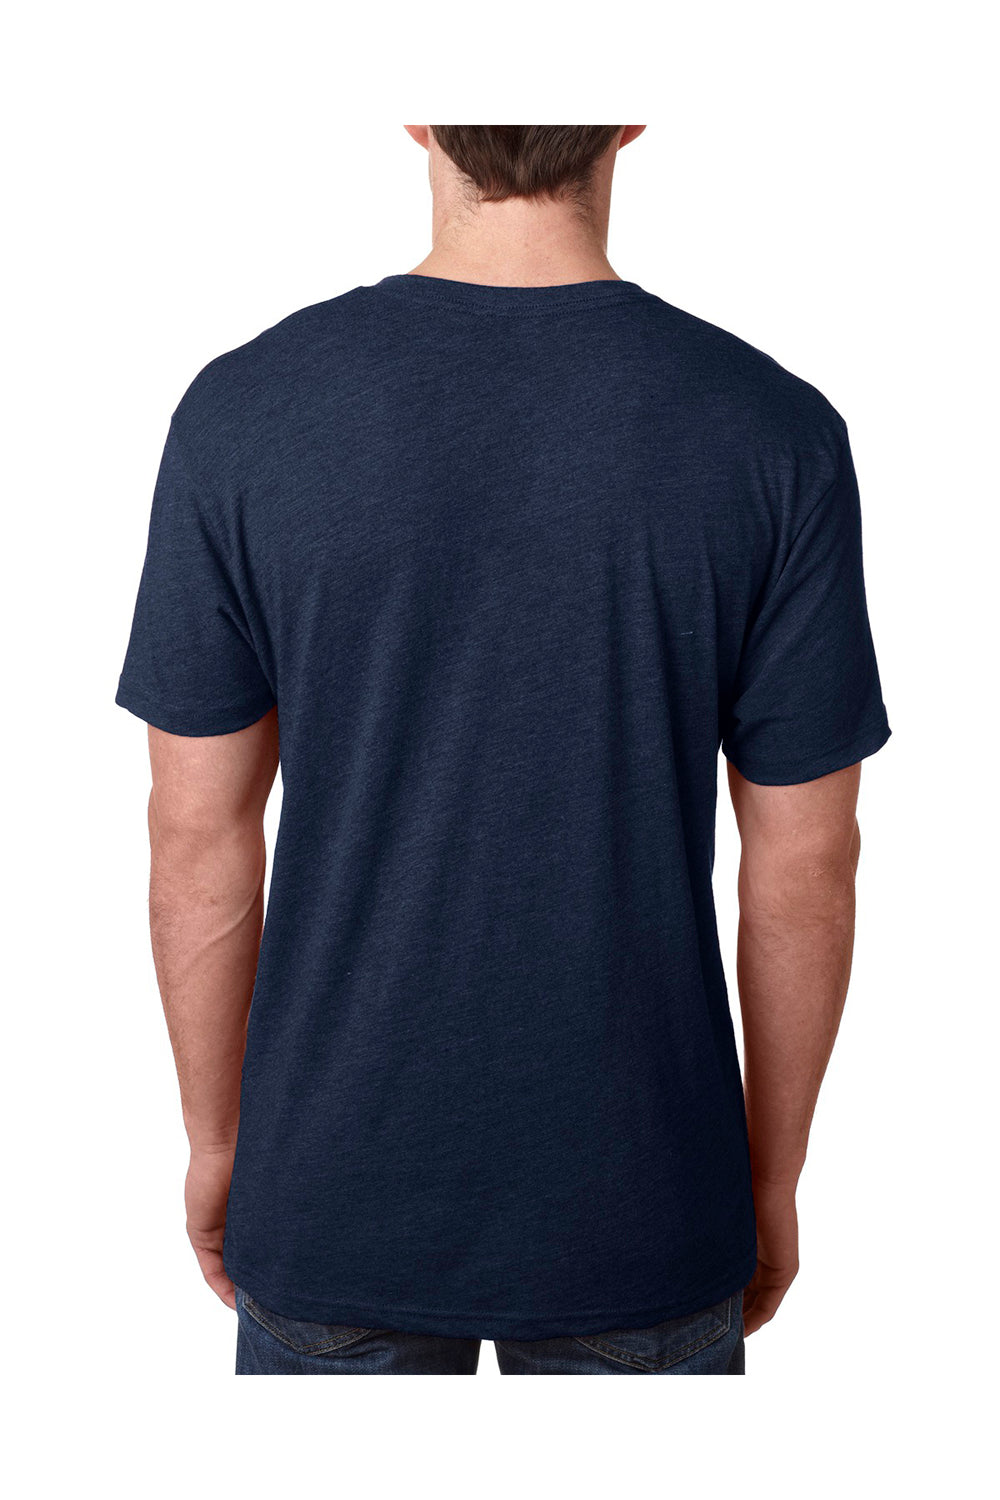 Next Level 6040 Mens Jersey Short Sleeve V-Neck T-Shirt Navy Blue Back